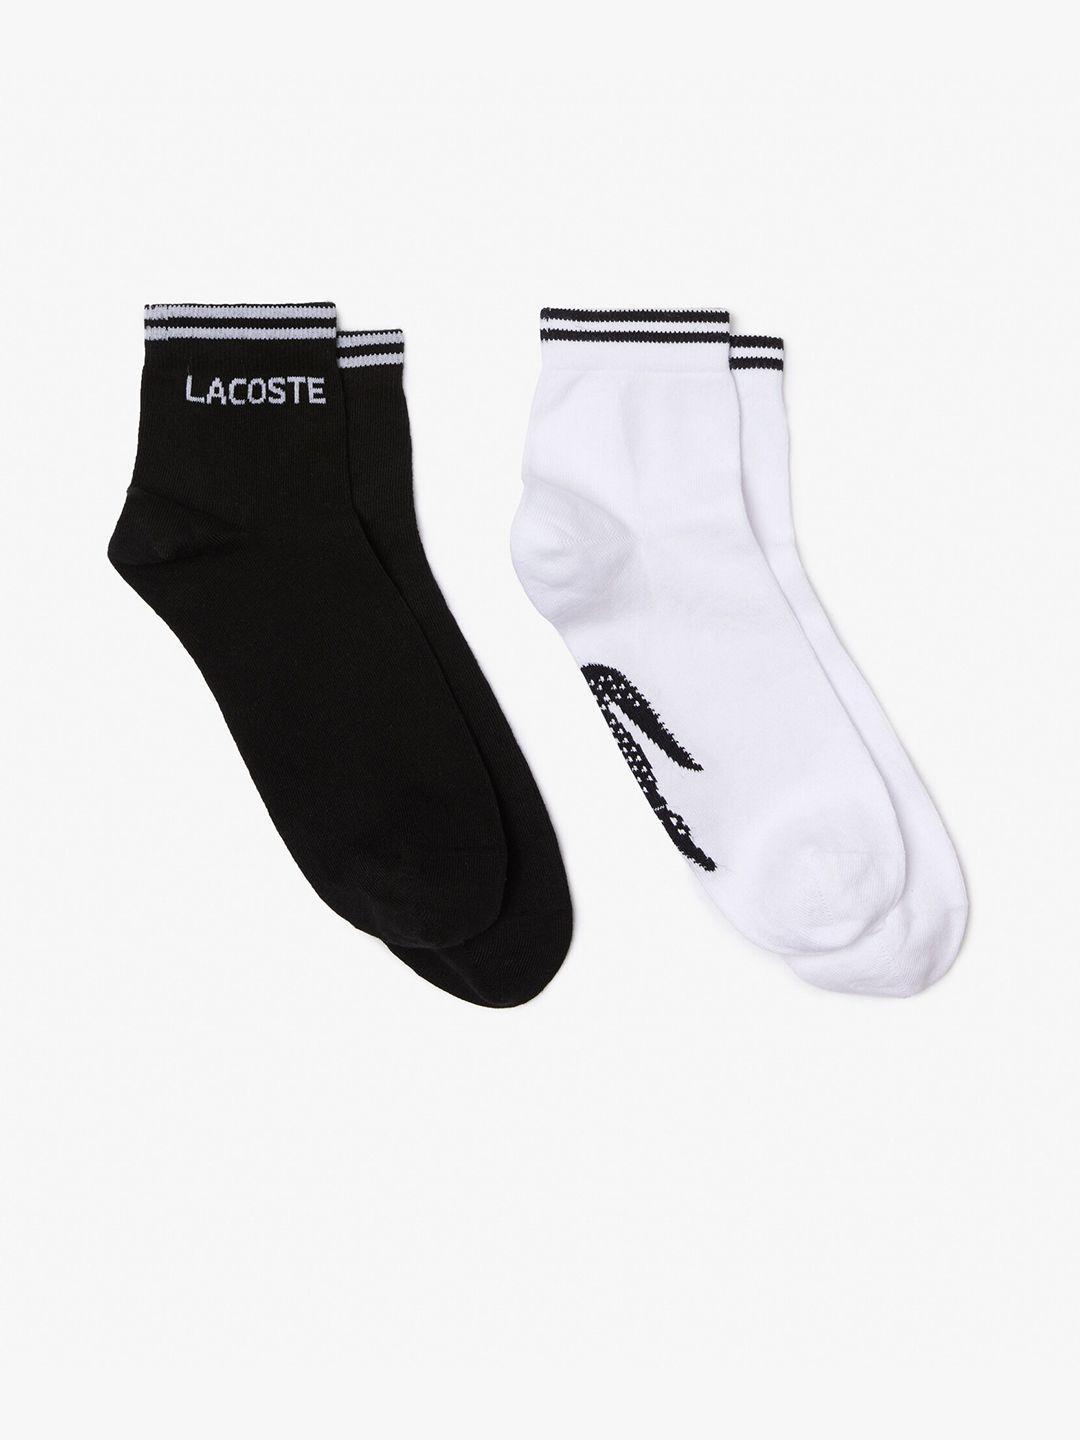 lacoste-men-pack-of-2-ribbed-ankle-length-sports-socks